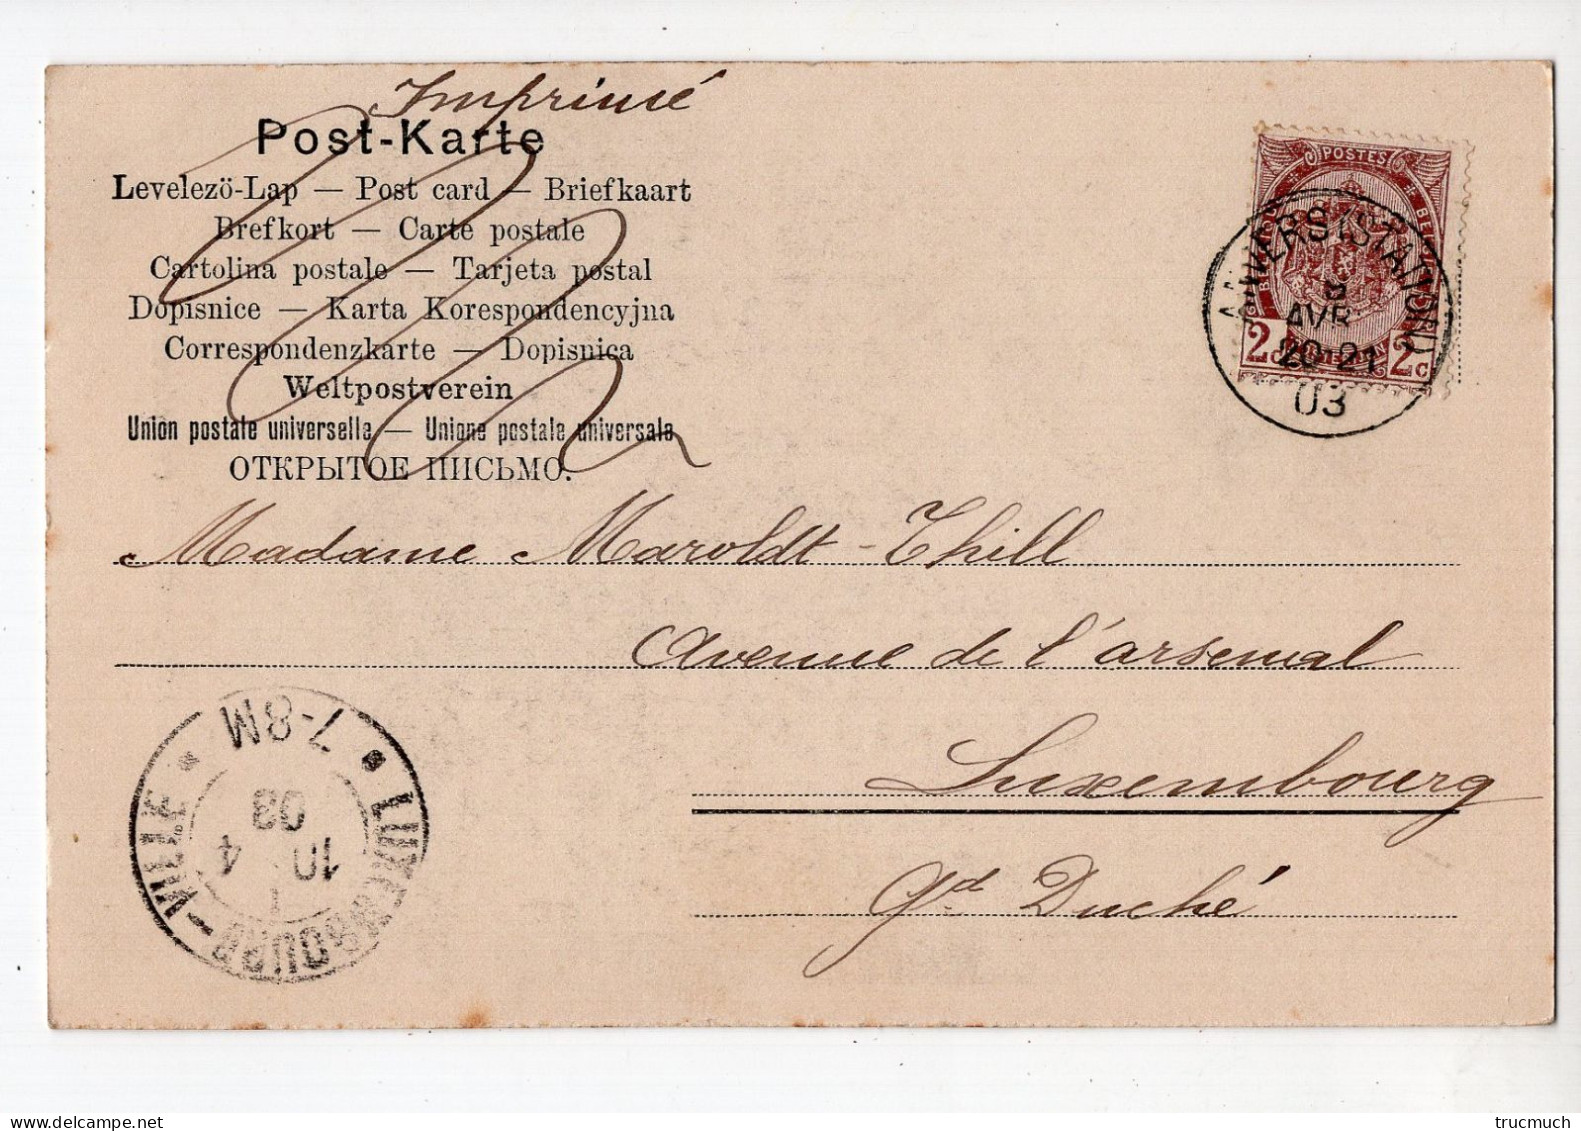 259 - HUMOUR - Jung Heidelberg - Enfants - Zechende junge Studenten - série de 6 cartes *1903*